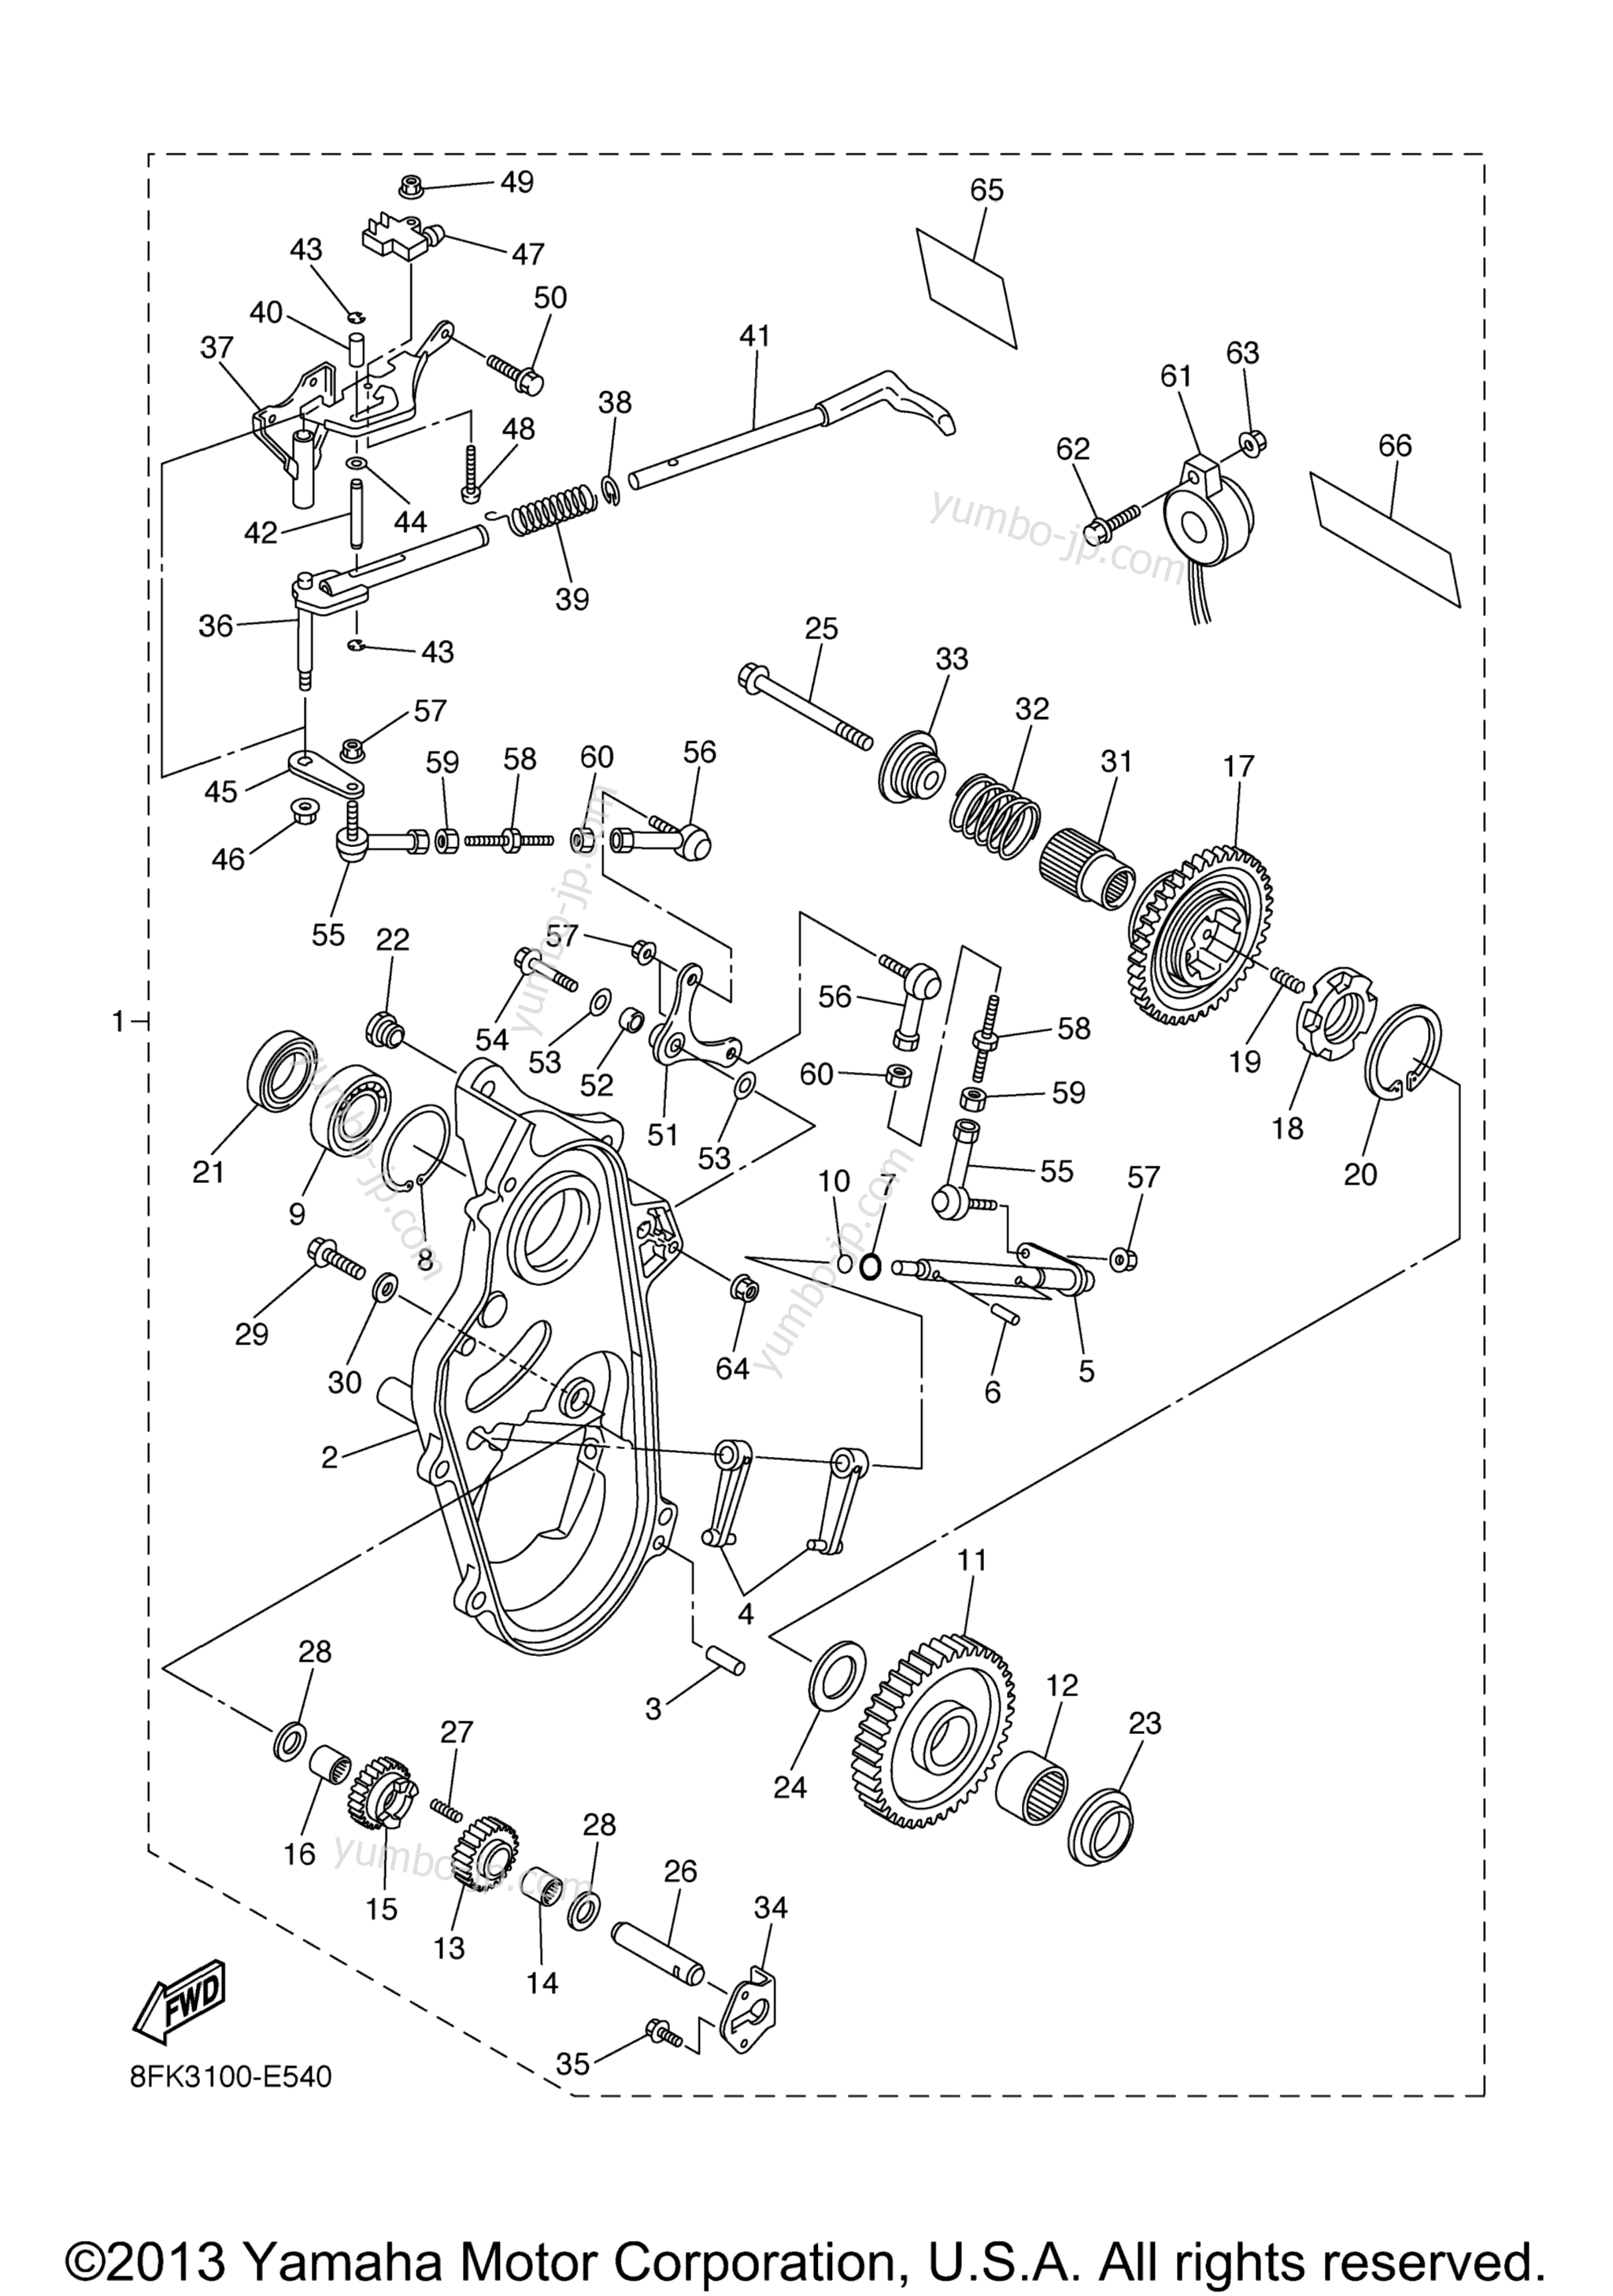 Alternate Reverse Gear Kit for snowmobiles YAMAHA NYTRO (RS90NL) 2006 year